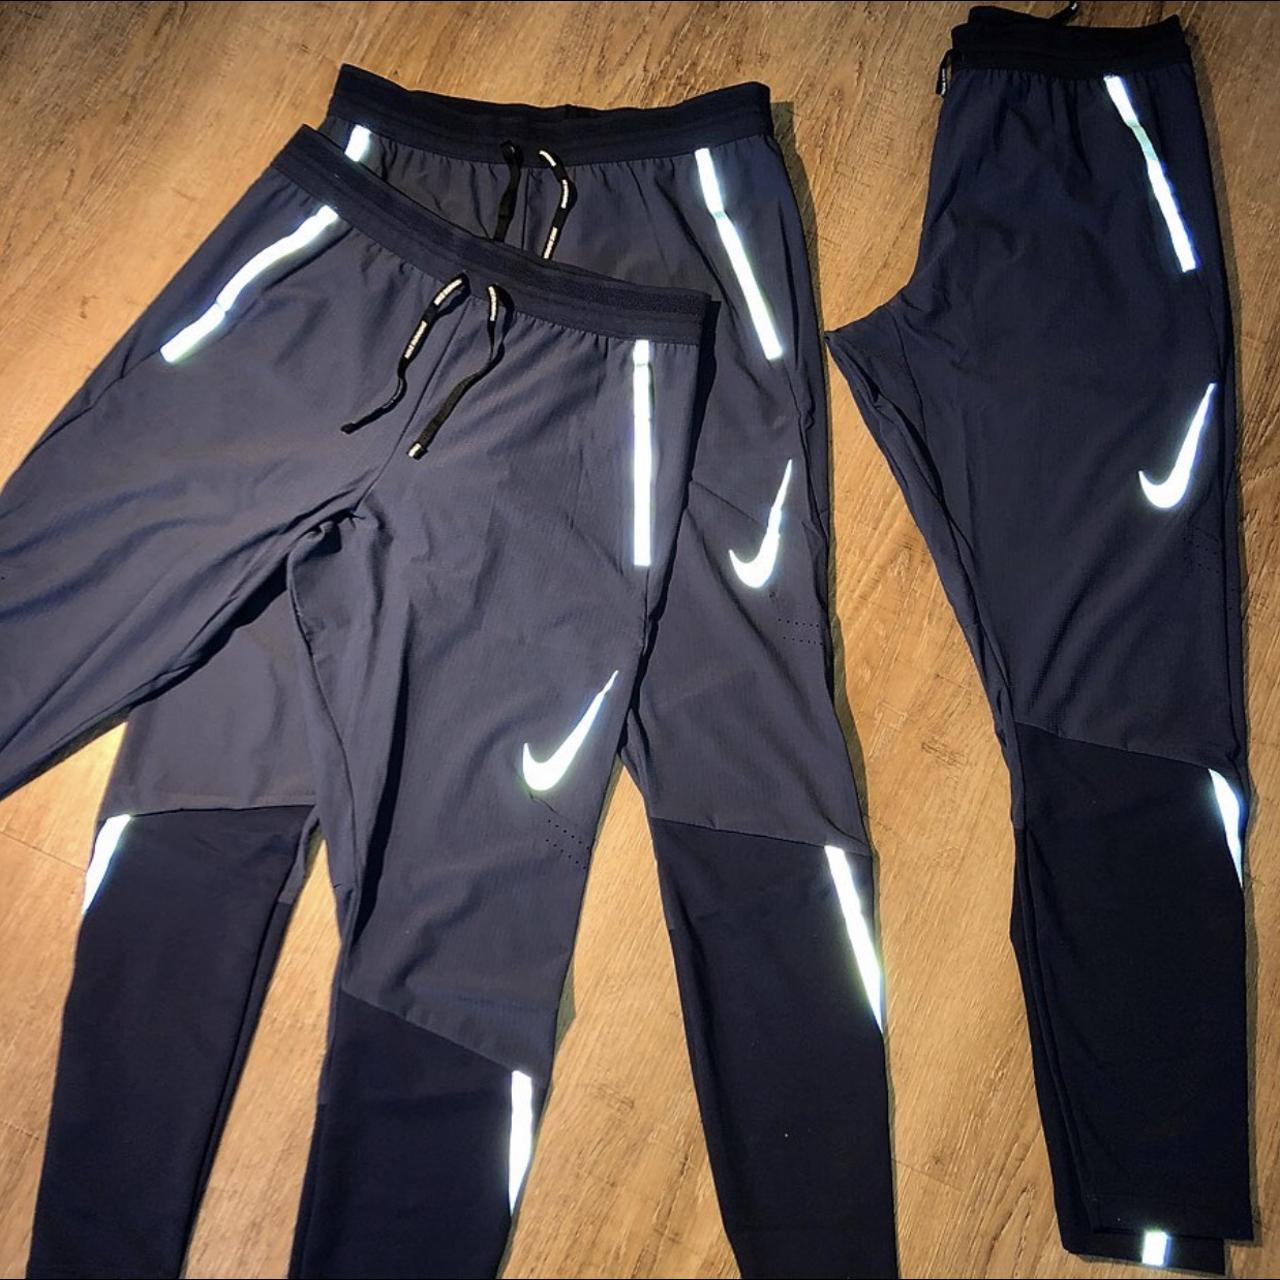 Nike swift running pants Brand new RRP £98 **SOLD** - Depop